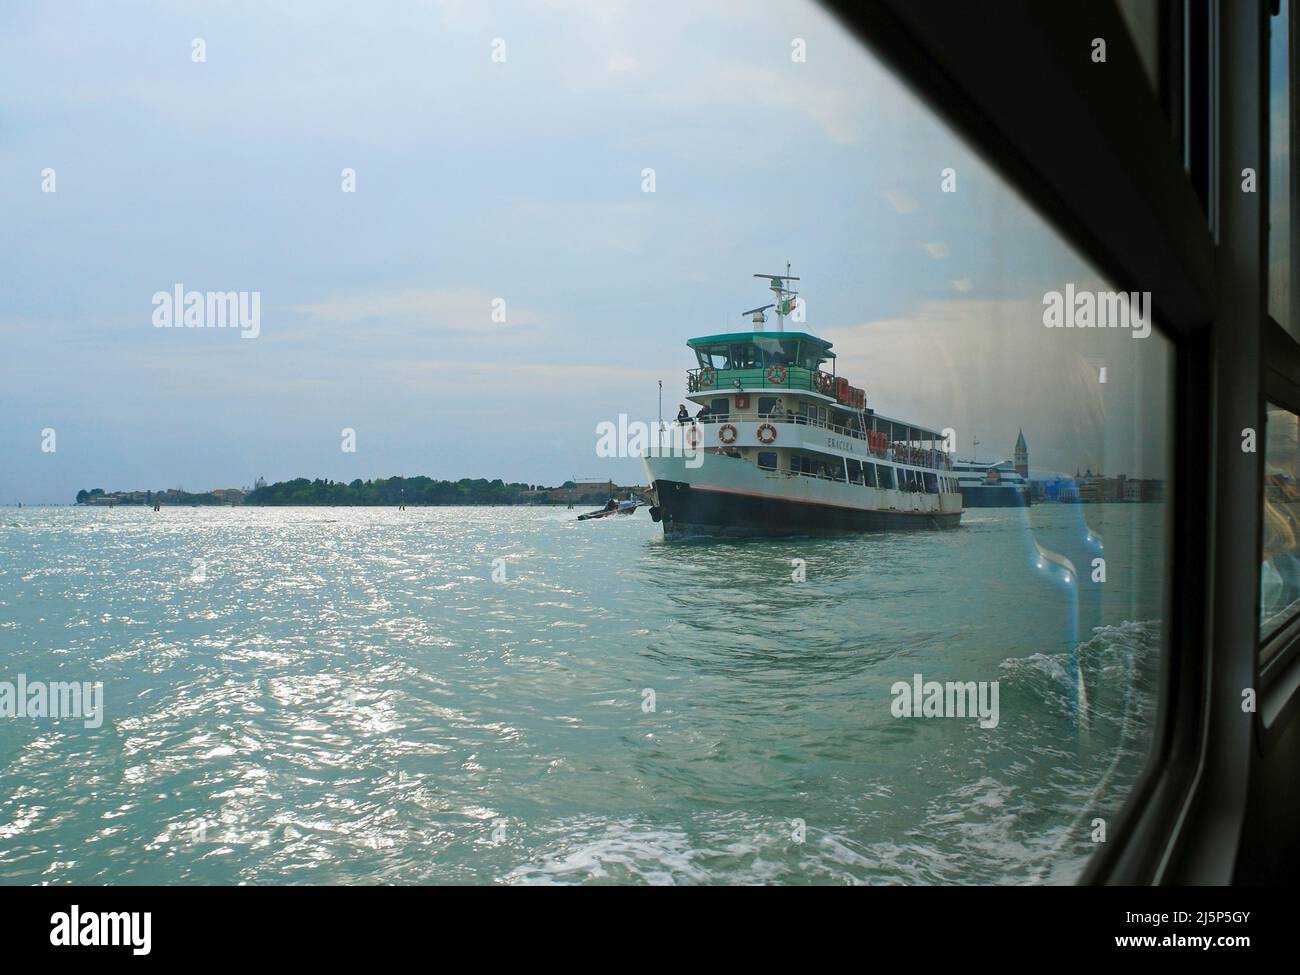 vaporetto (water bus) seen through a window of a motor boat, Venice, Italy Stock Photo